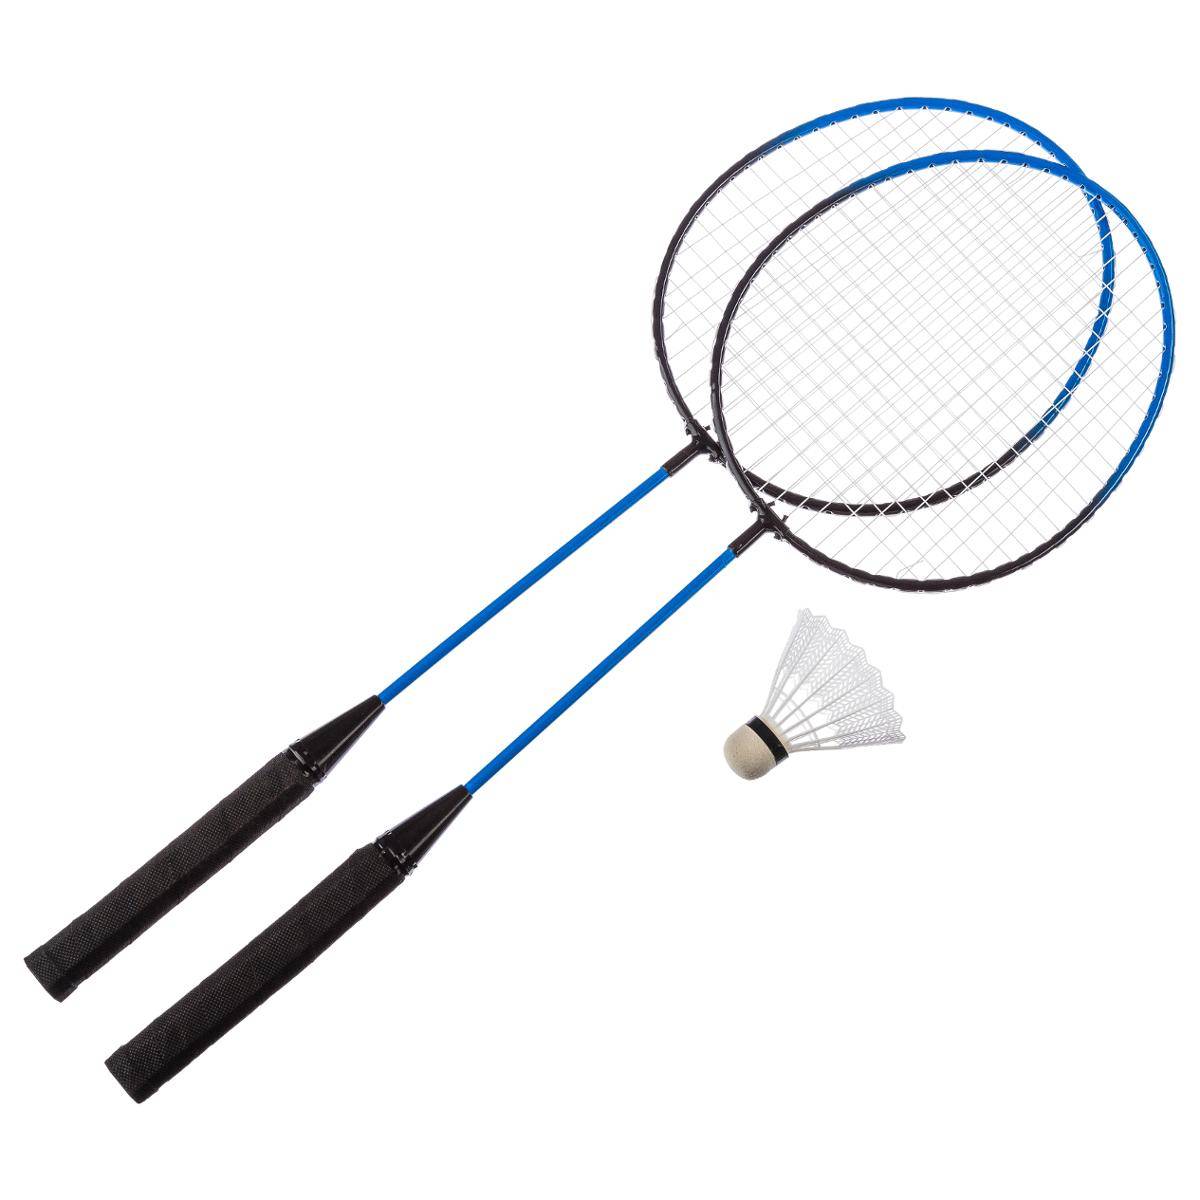 Badminton raquettes x2 + volant